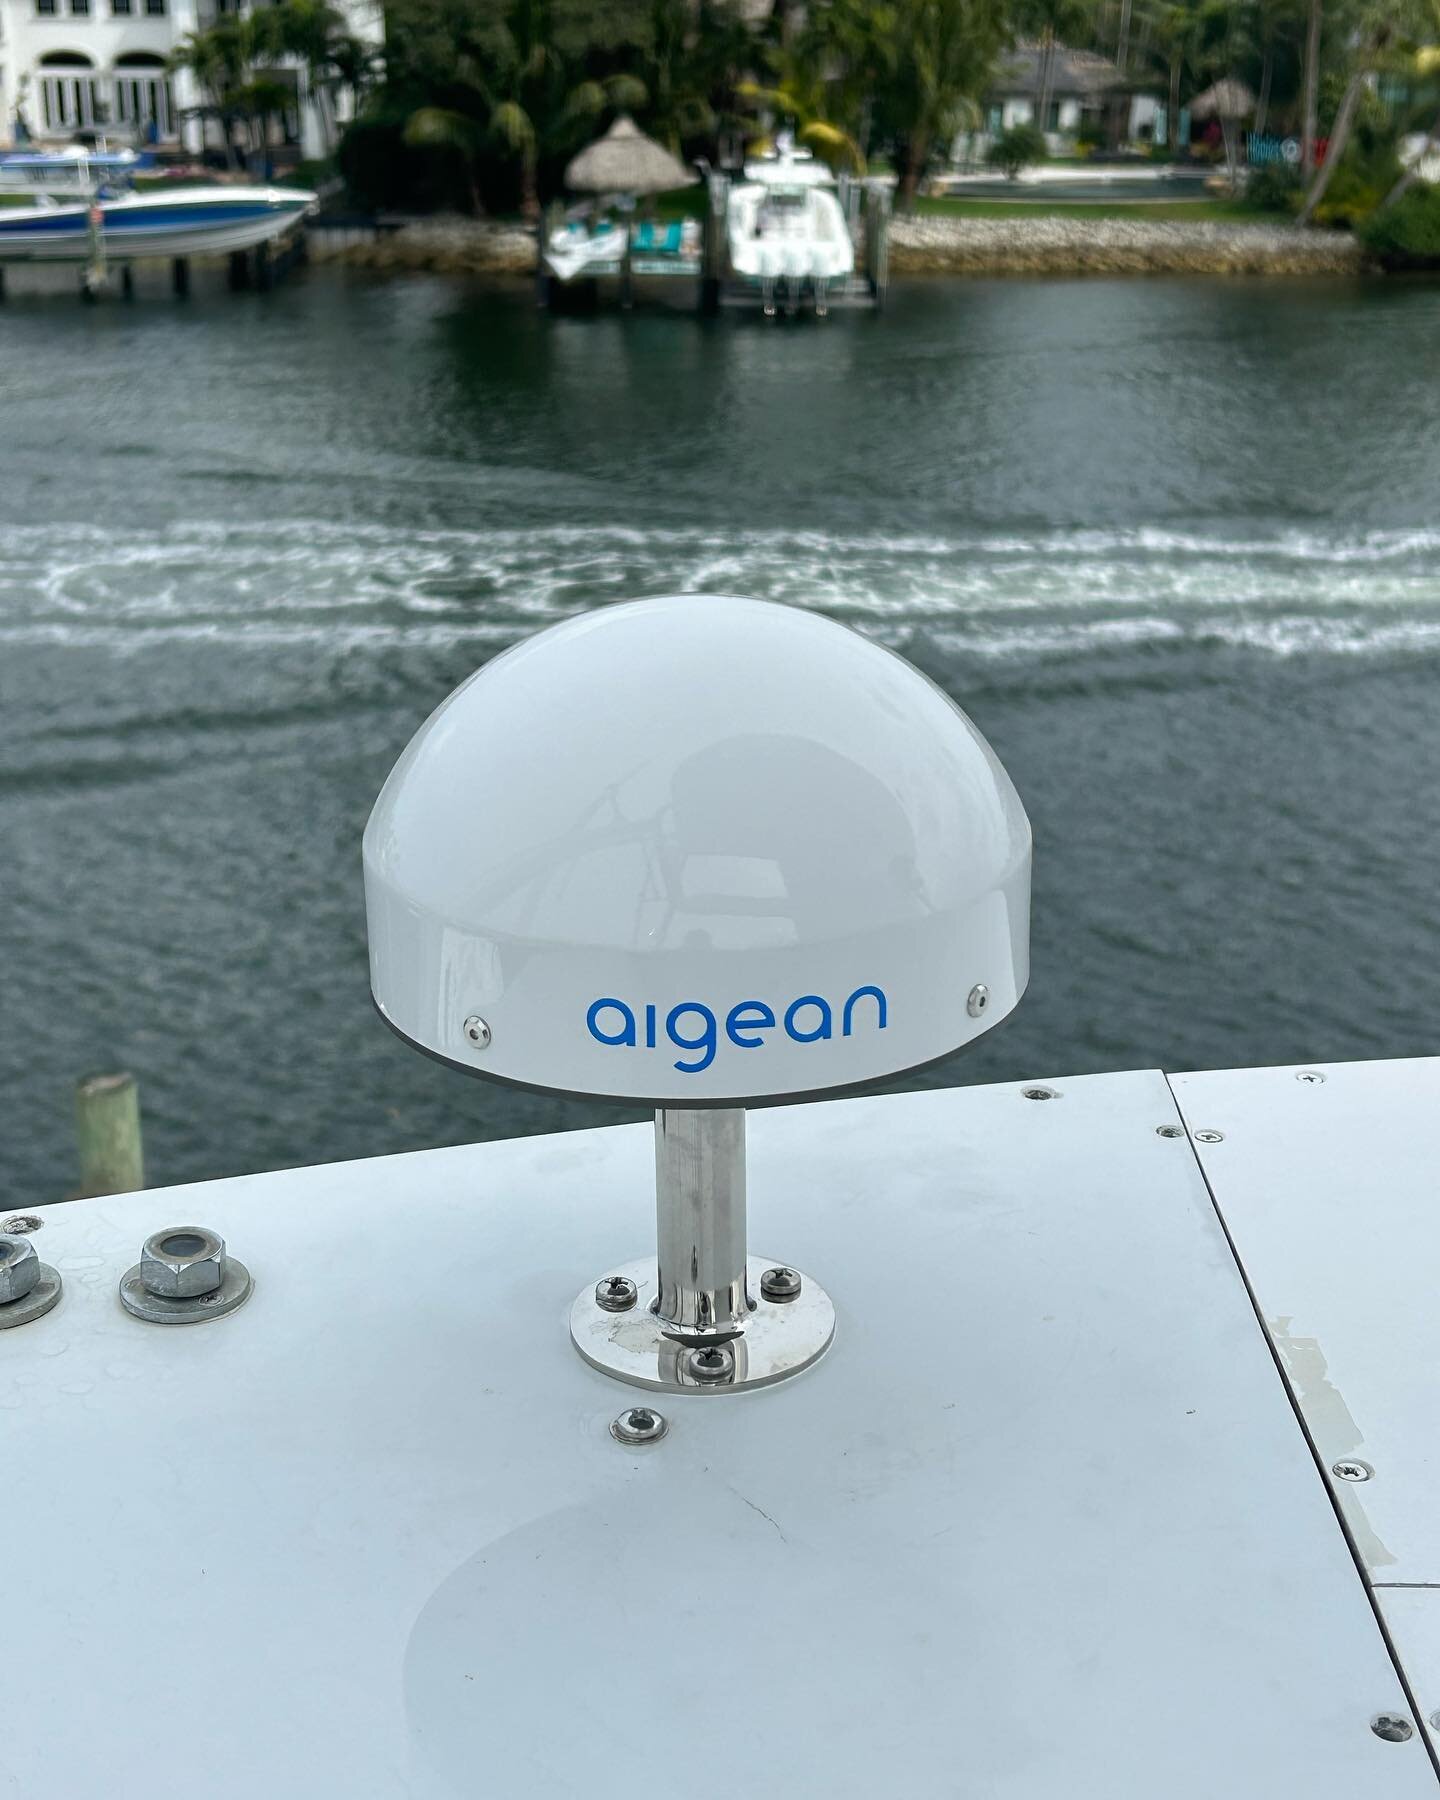 Aigean LD7000 install for wireless connectivity!

#bluehorizonmarine #aigean #wireless #wifi #marineelectronics #sportfish #yachtmanagement